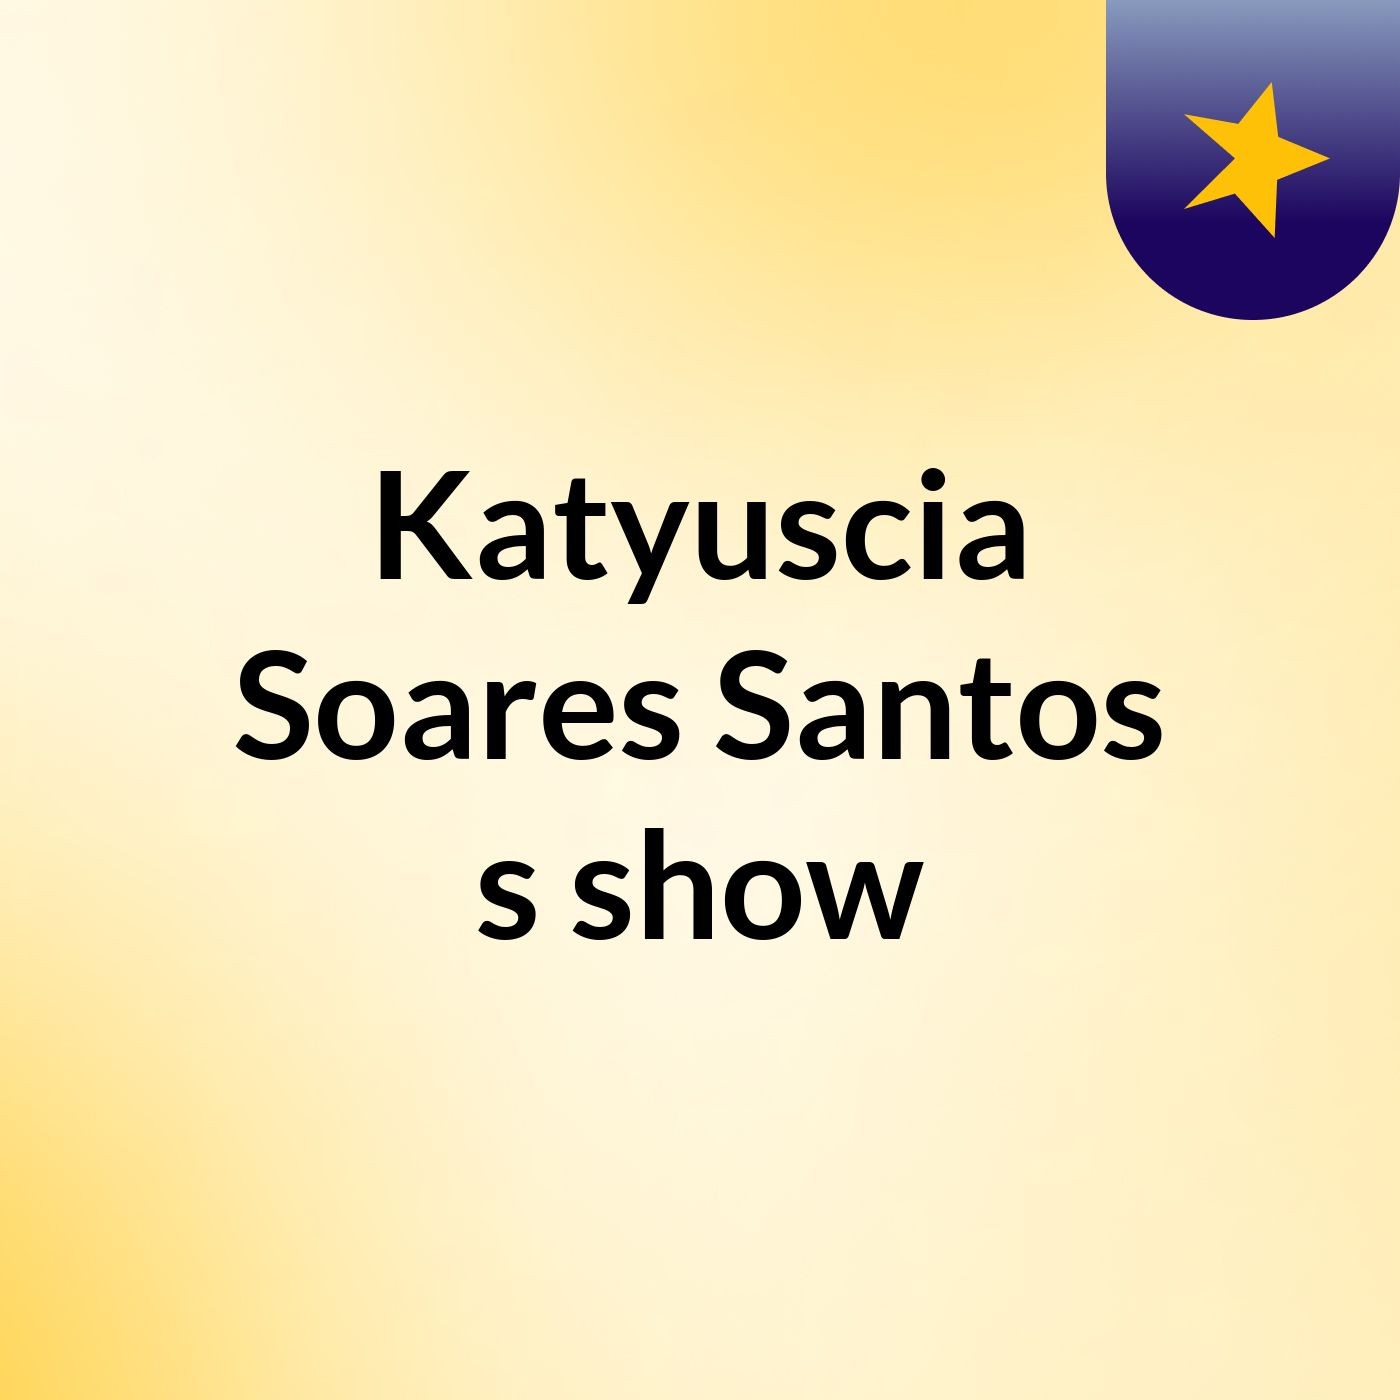 Katyuscia Soares Santos's show